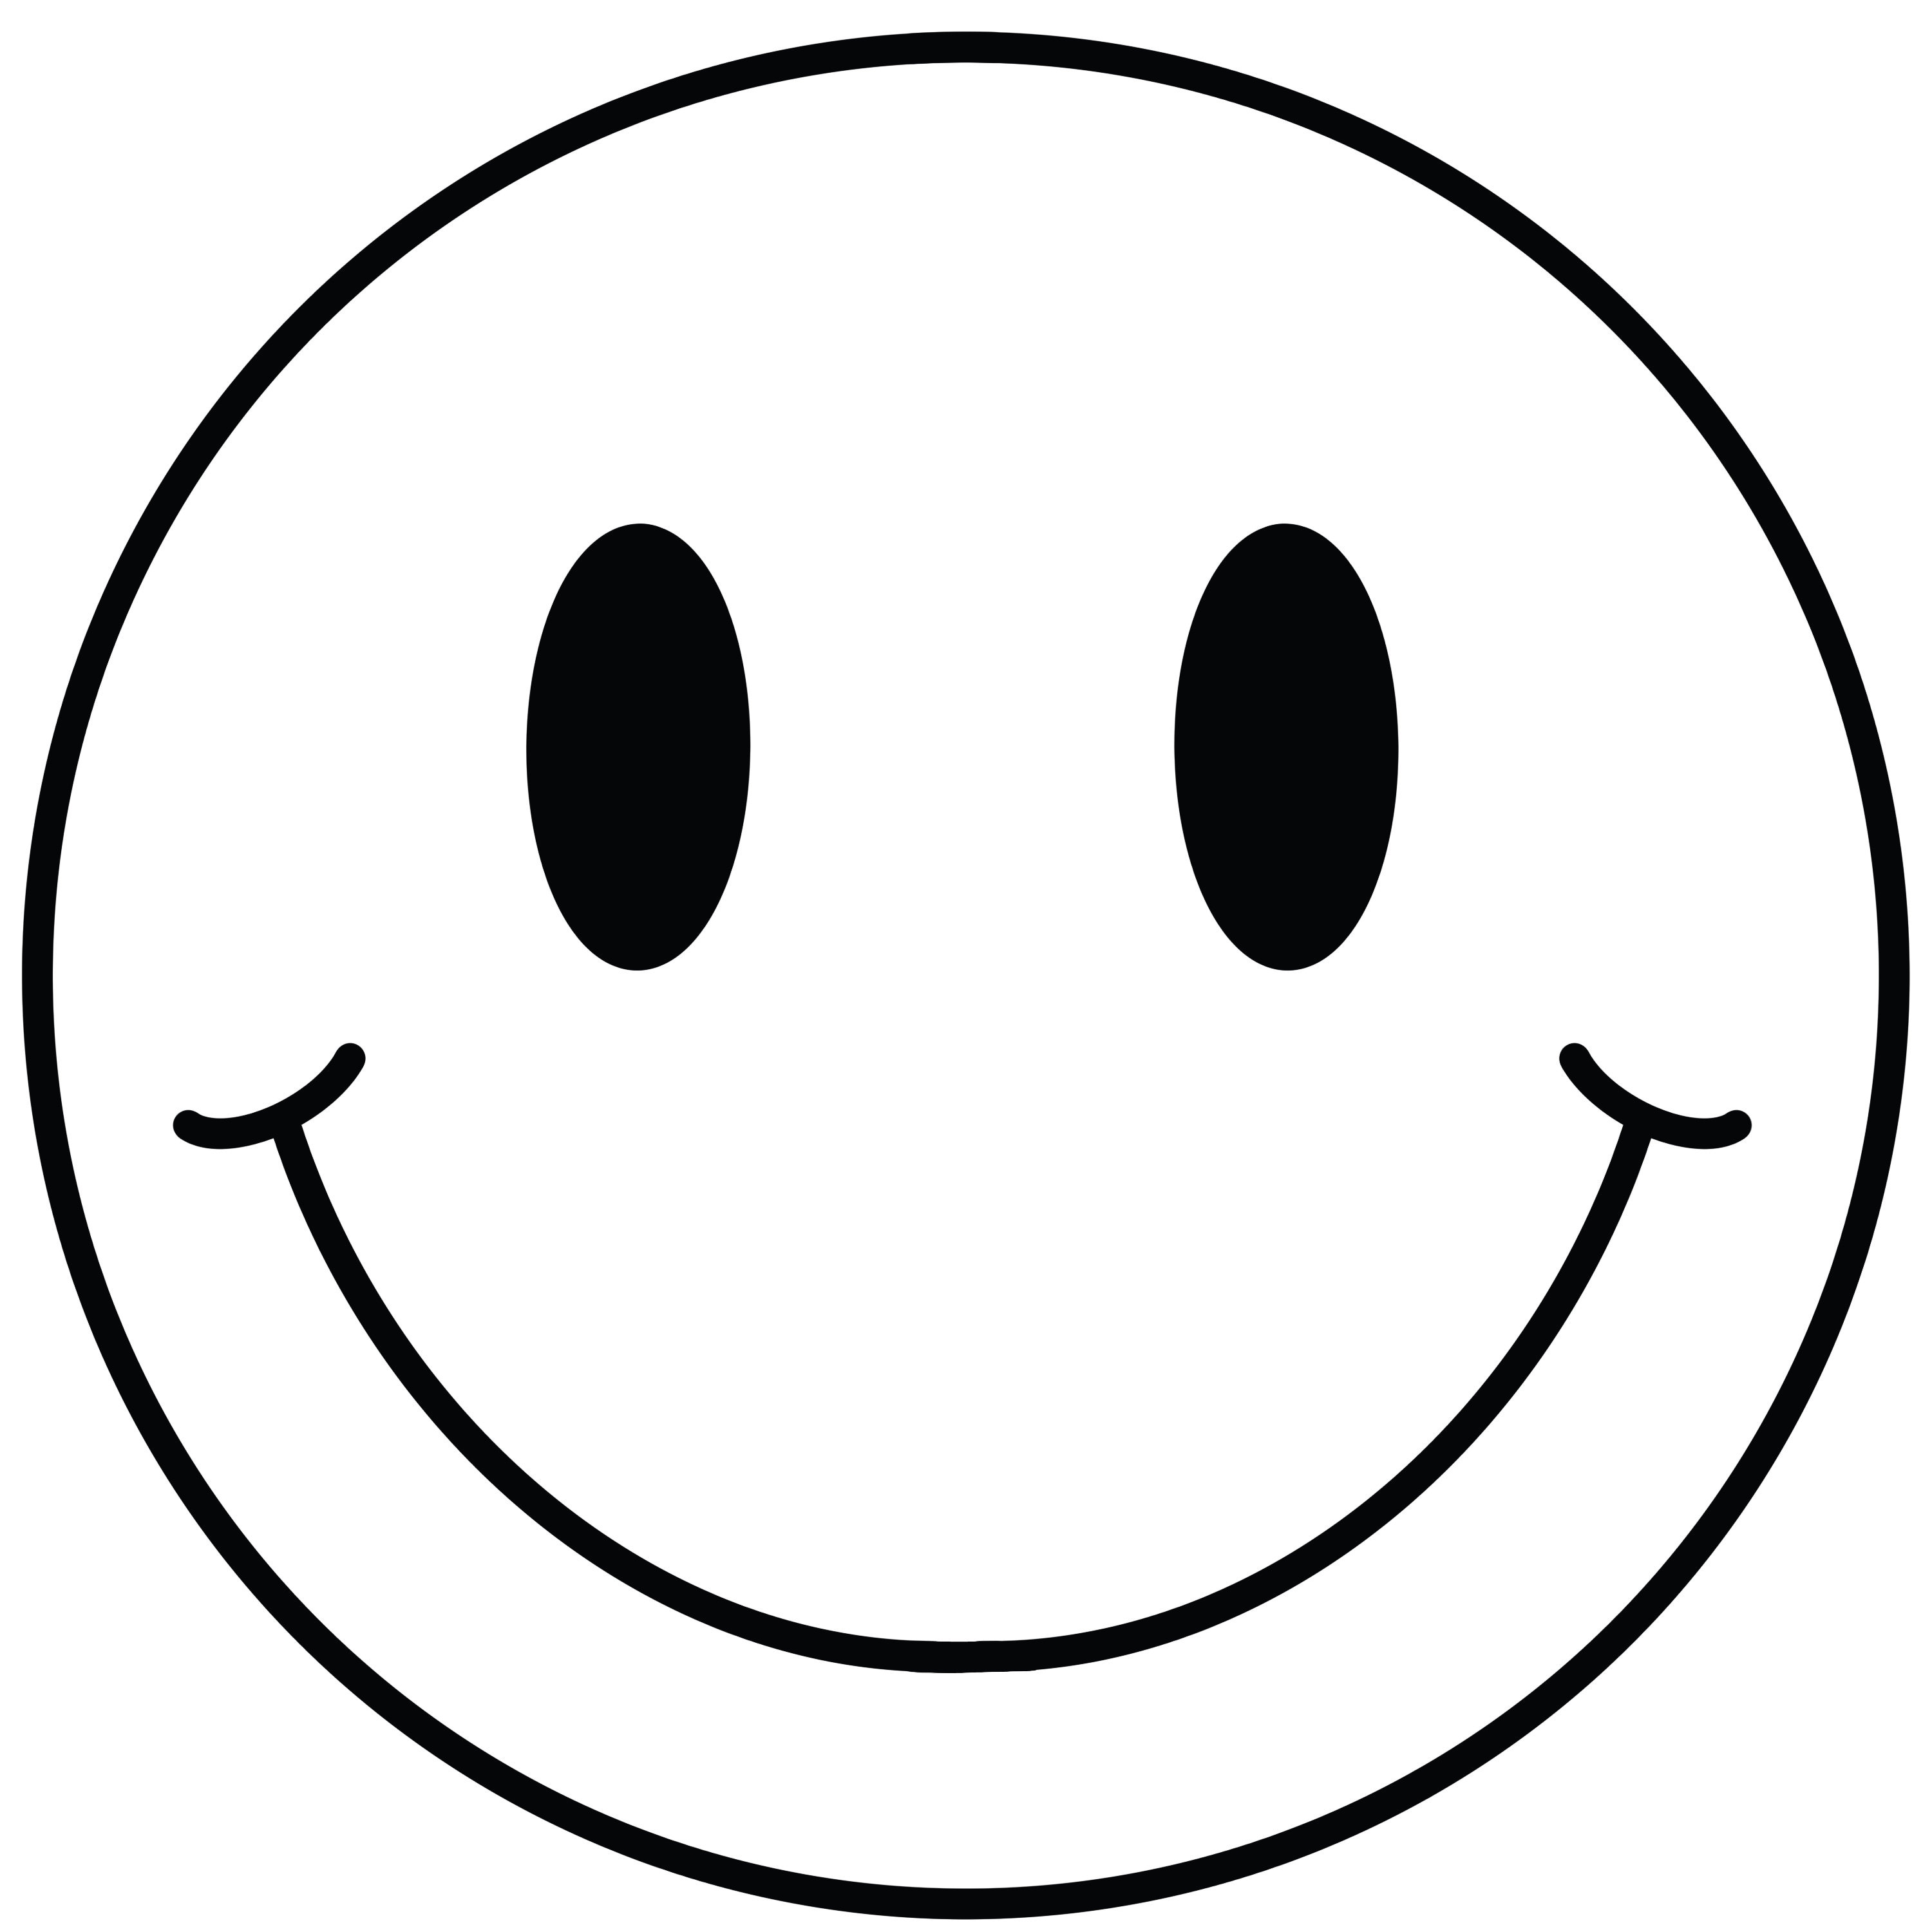 Digital Download PNG JPG File Smiley Face With Black Lines - Etsy